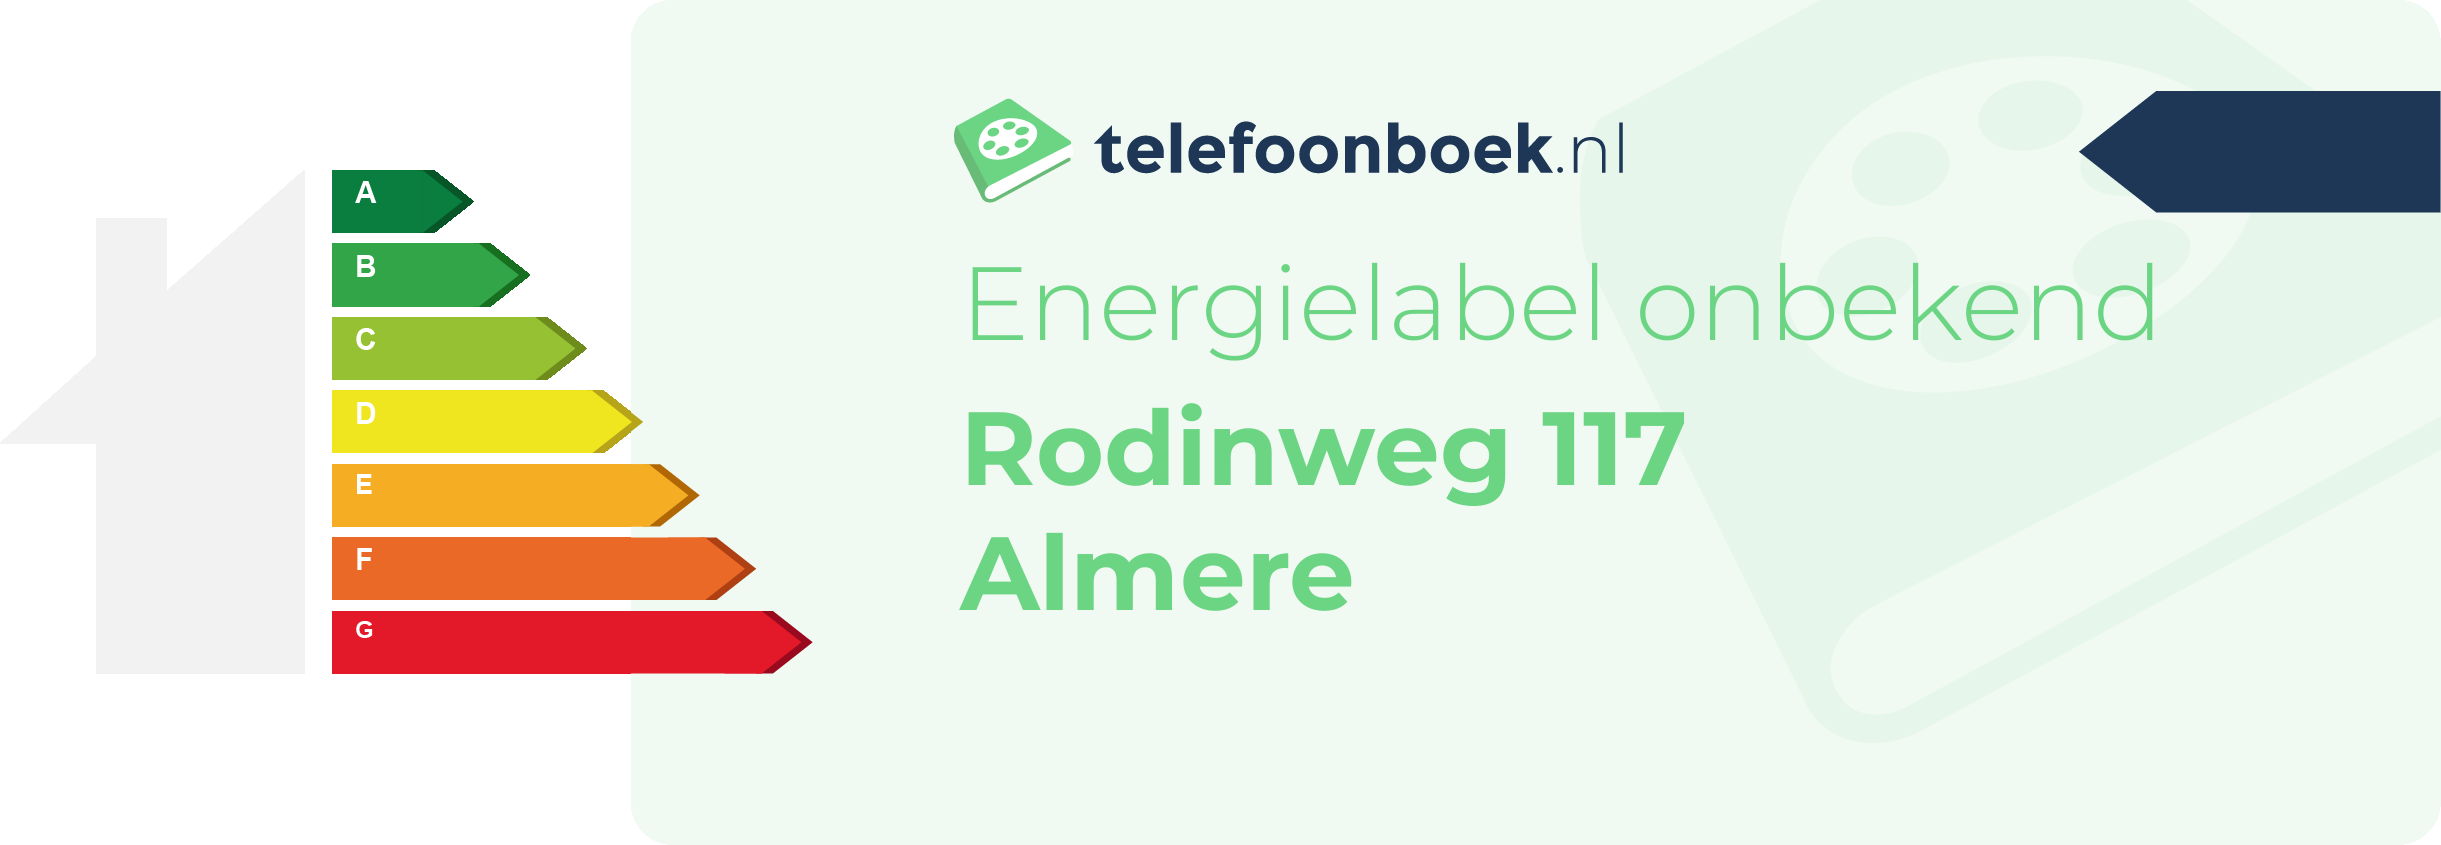 Energielabel Rodinweg 117 Almere